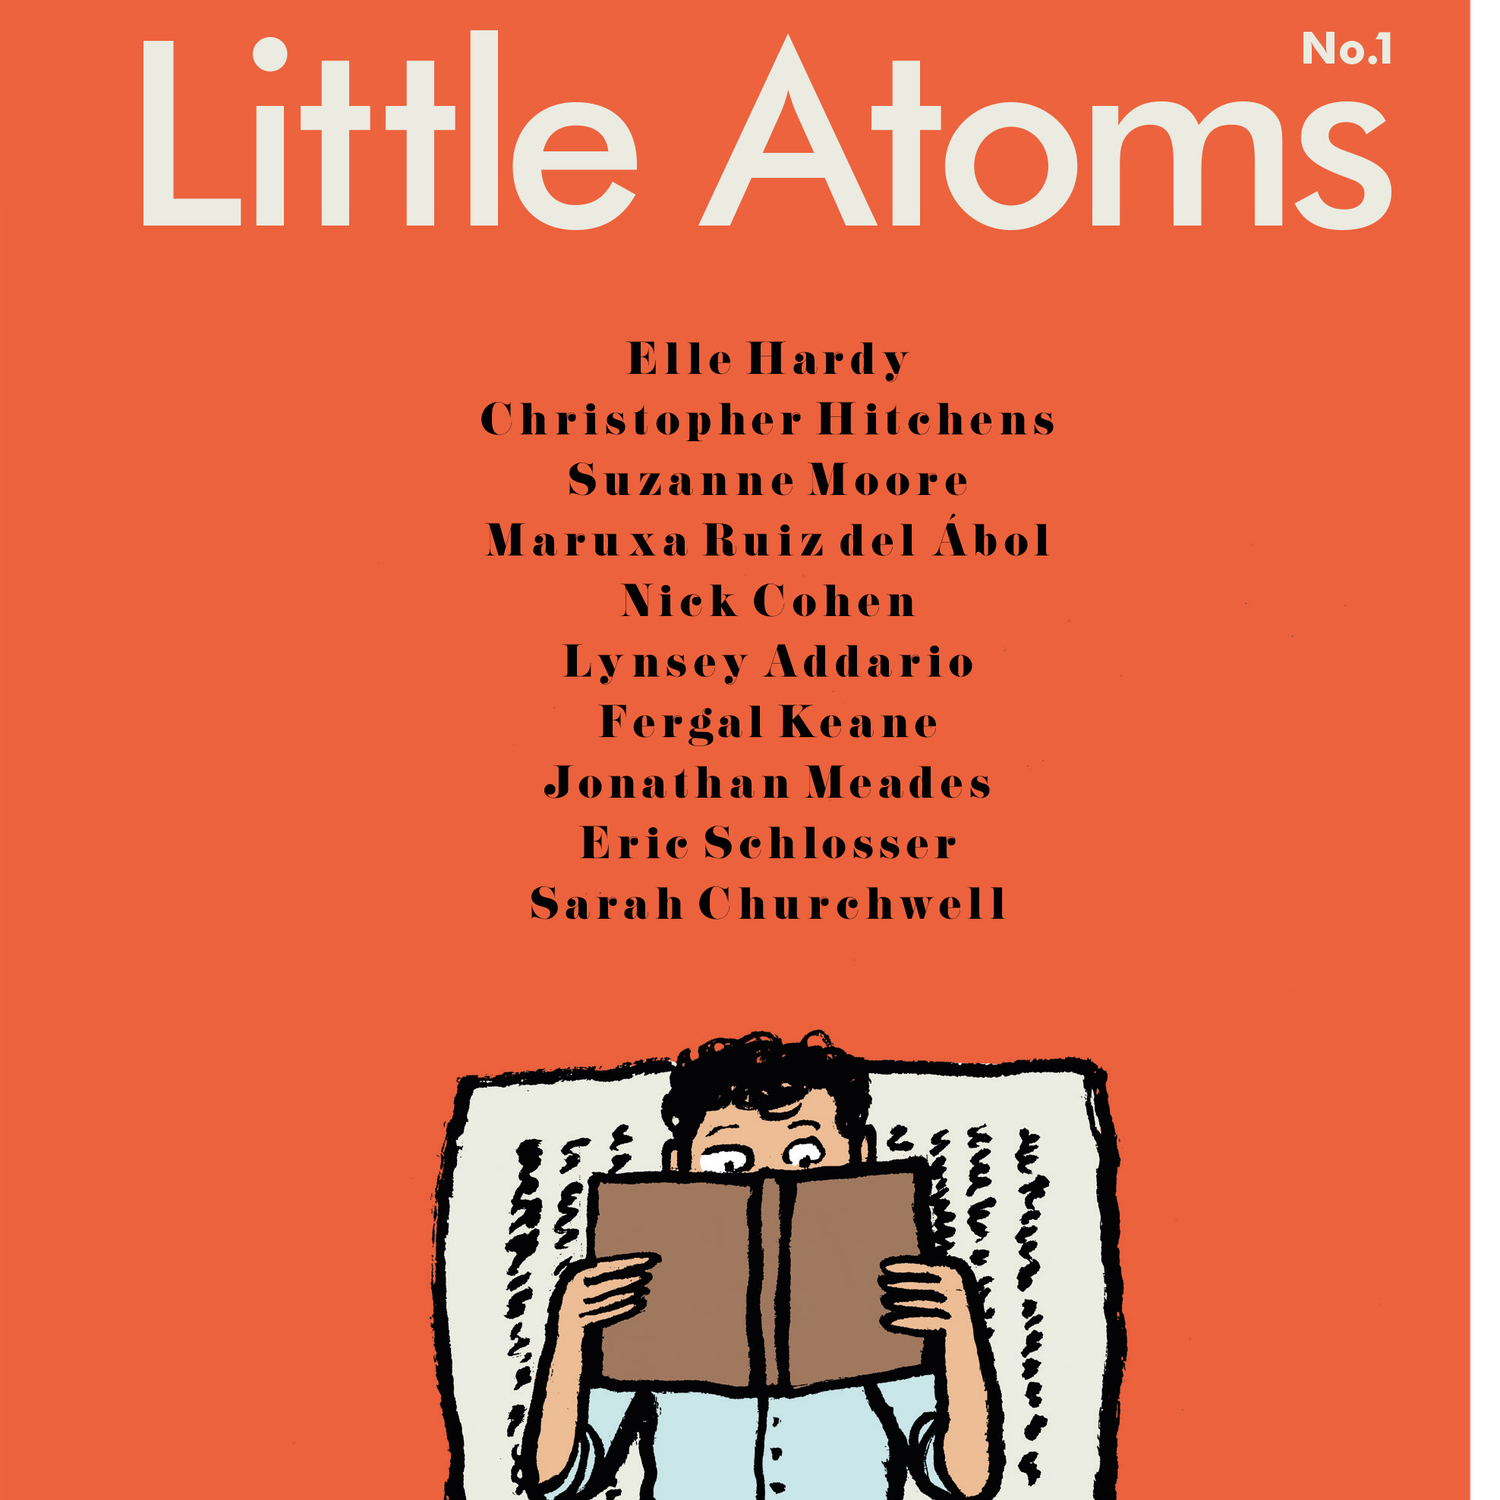 Little Atoms - Podcast Addict